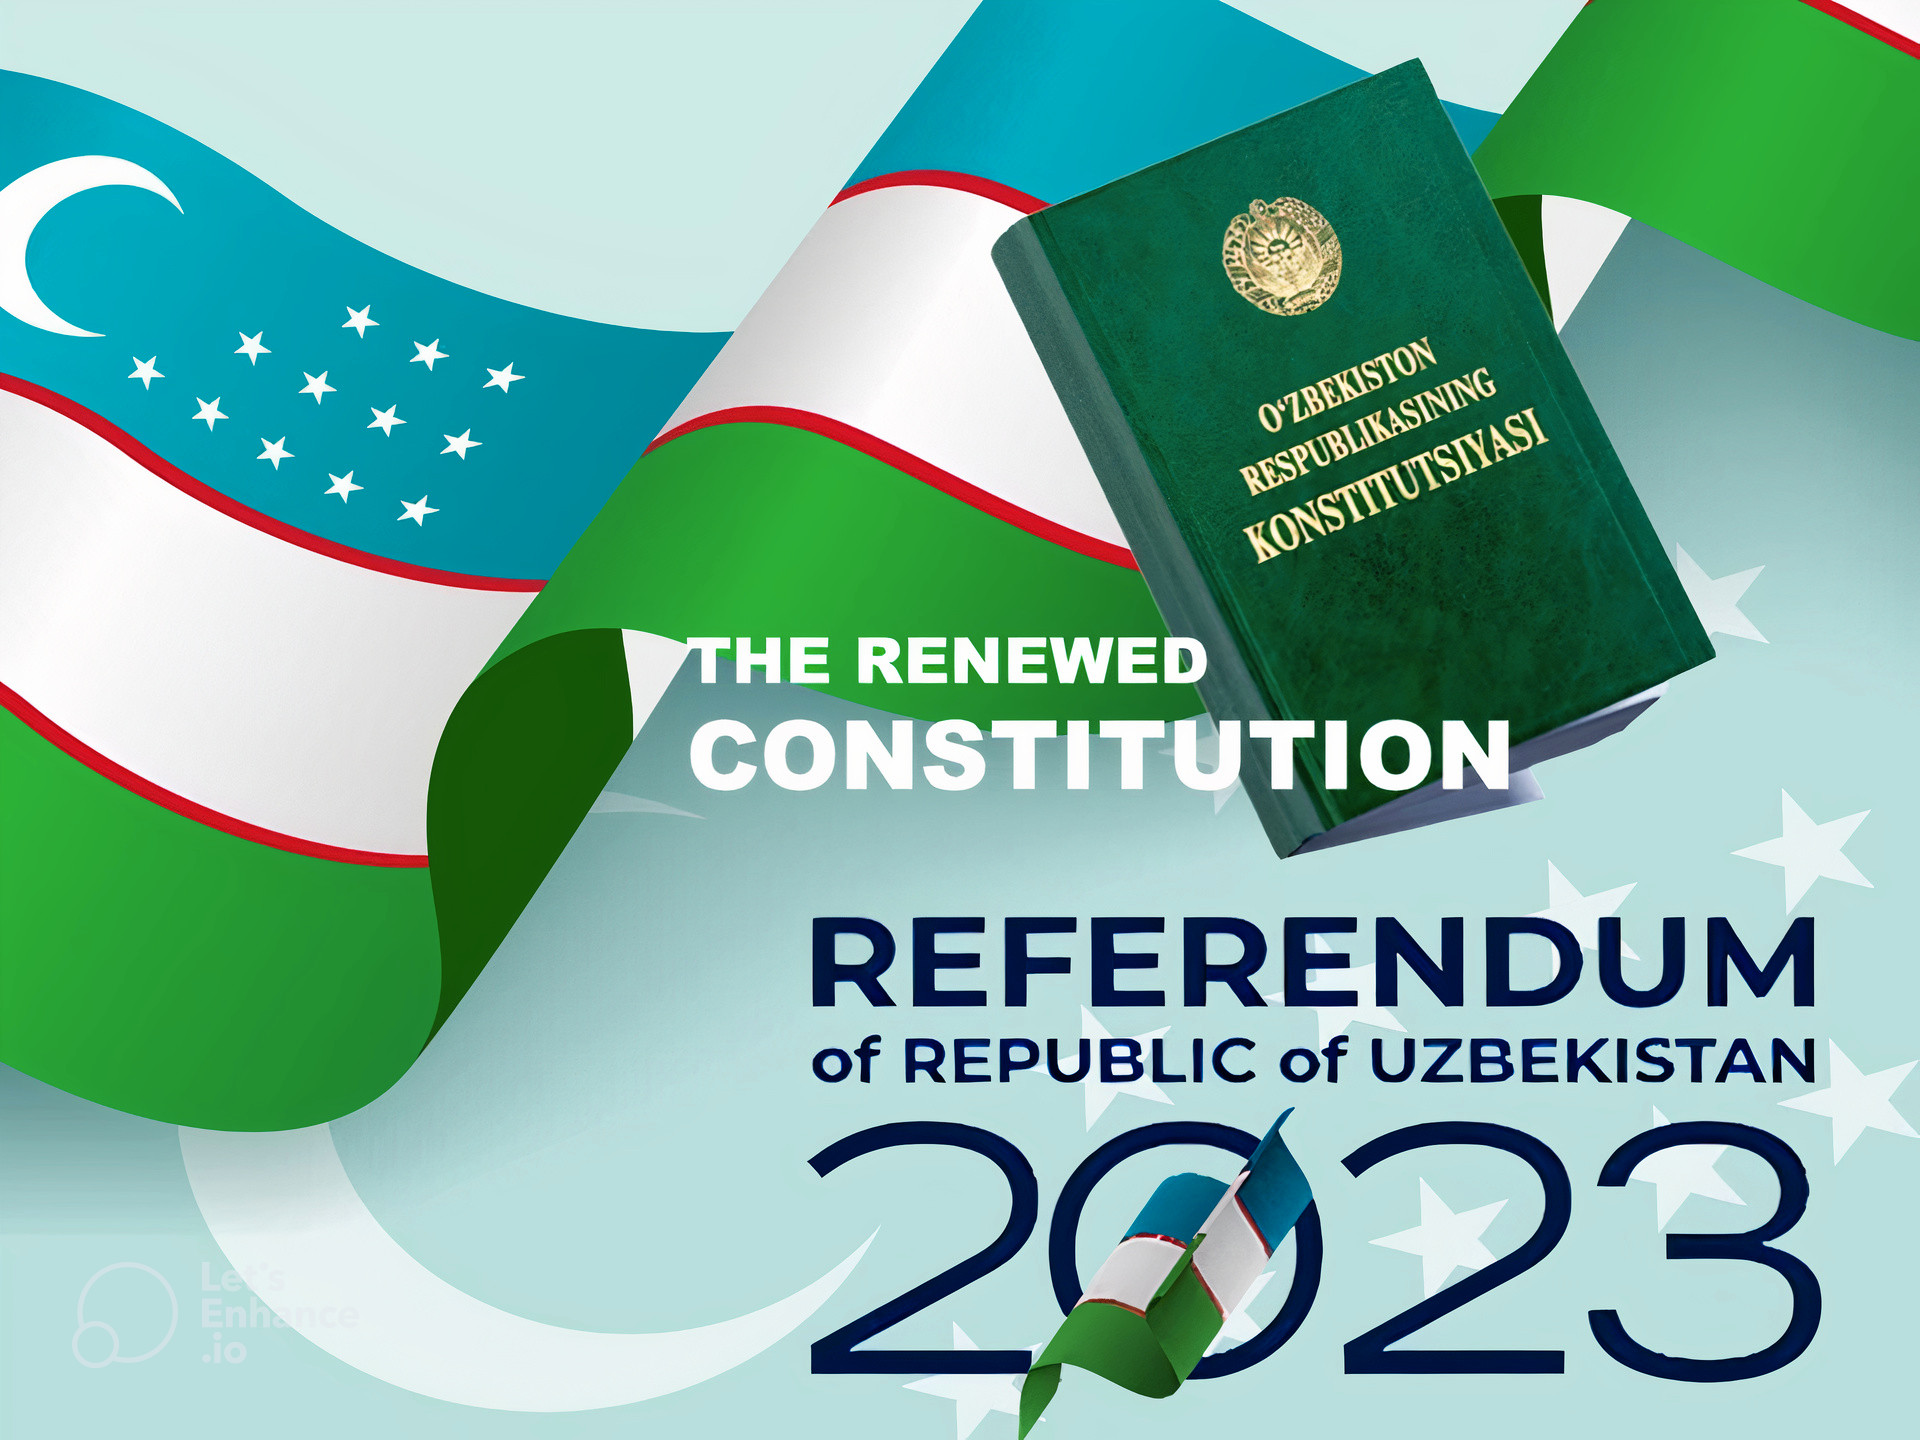 Poster on the constitutional referendum in Uzbekistan